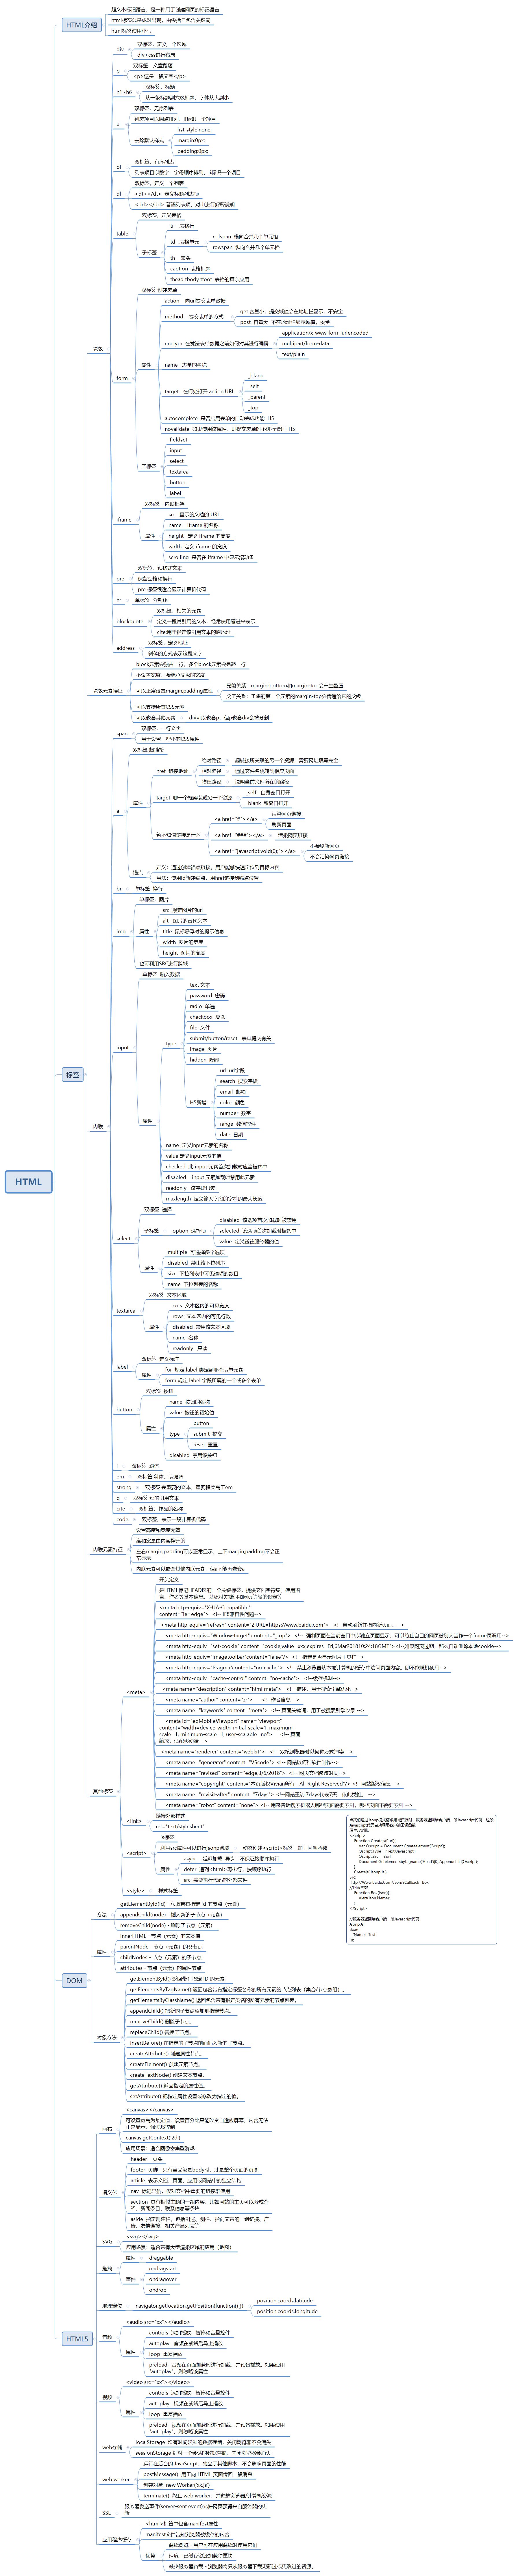 HTML，CSS，JavaScript知识树思维导图